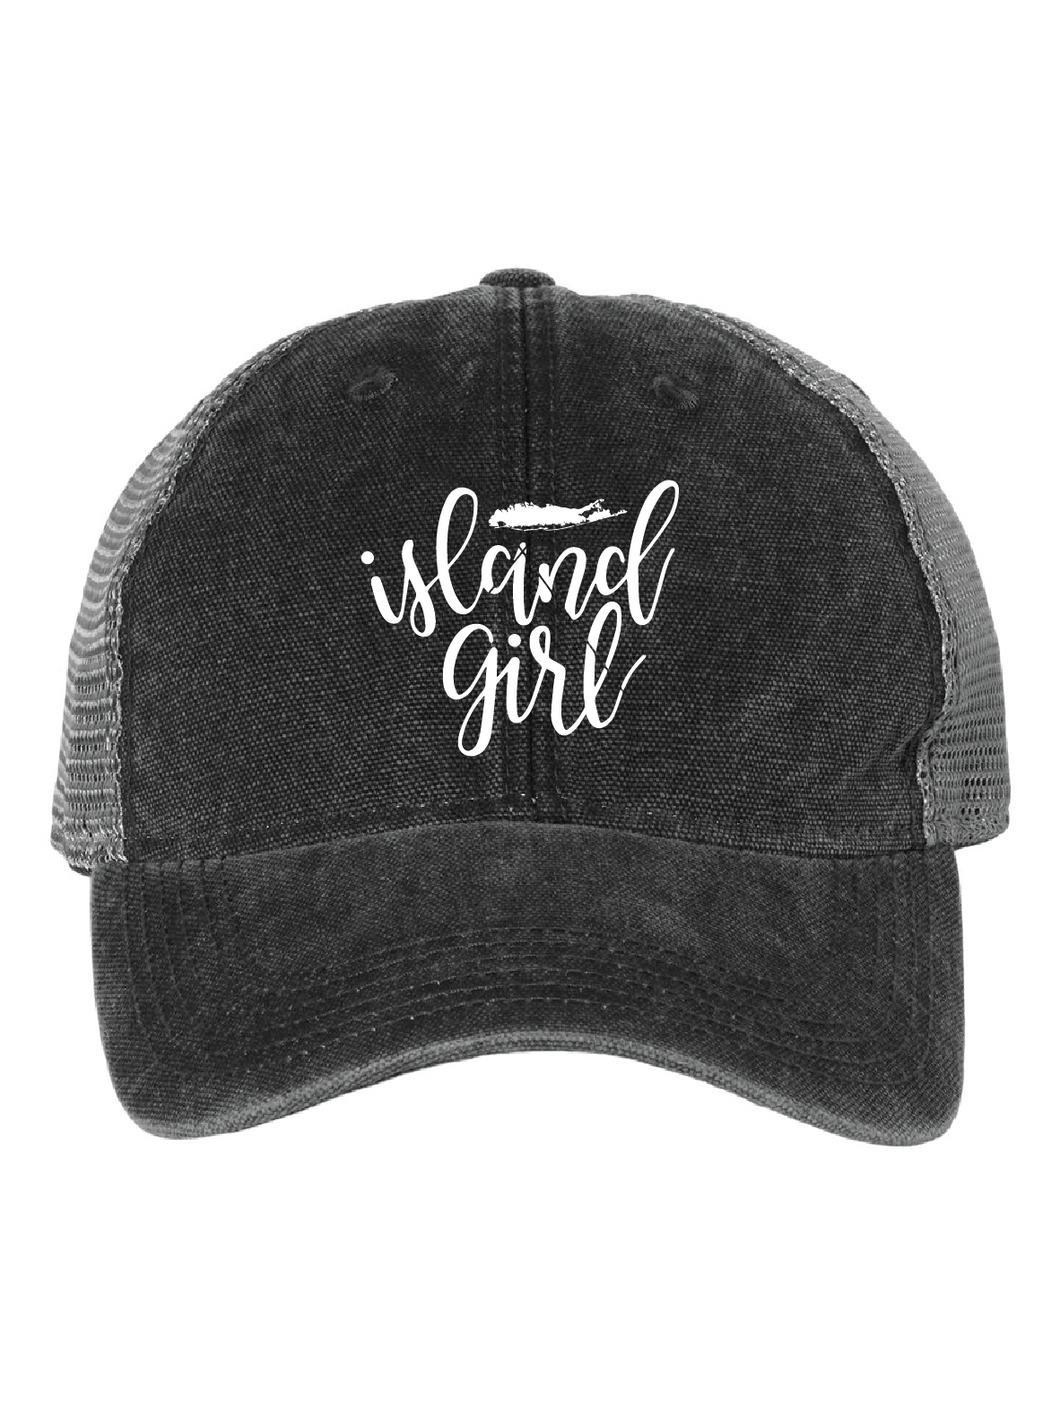 Island Girl Trucker Hat - Black